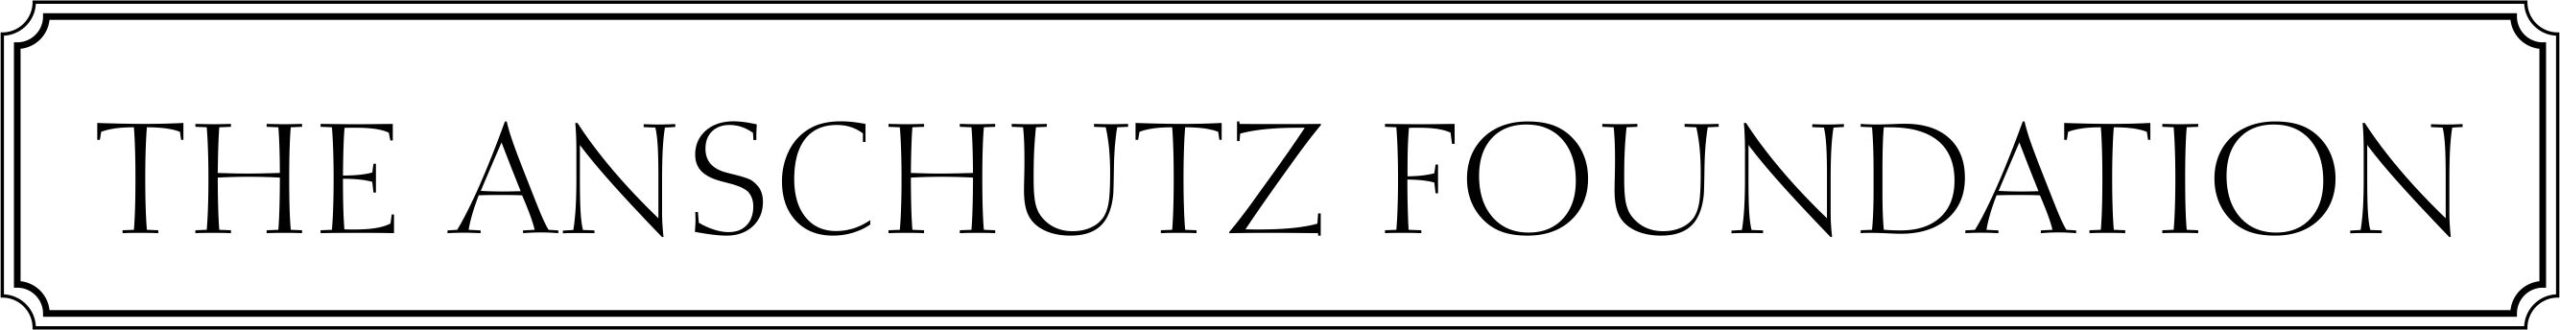 The Anschutz Foundation logo